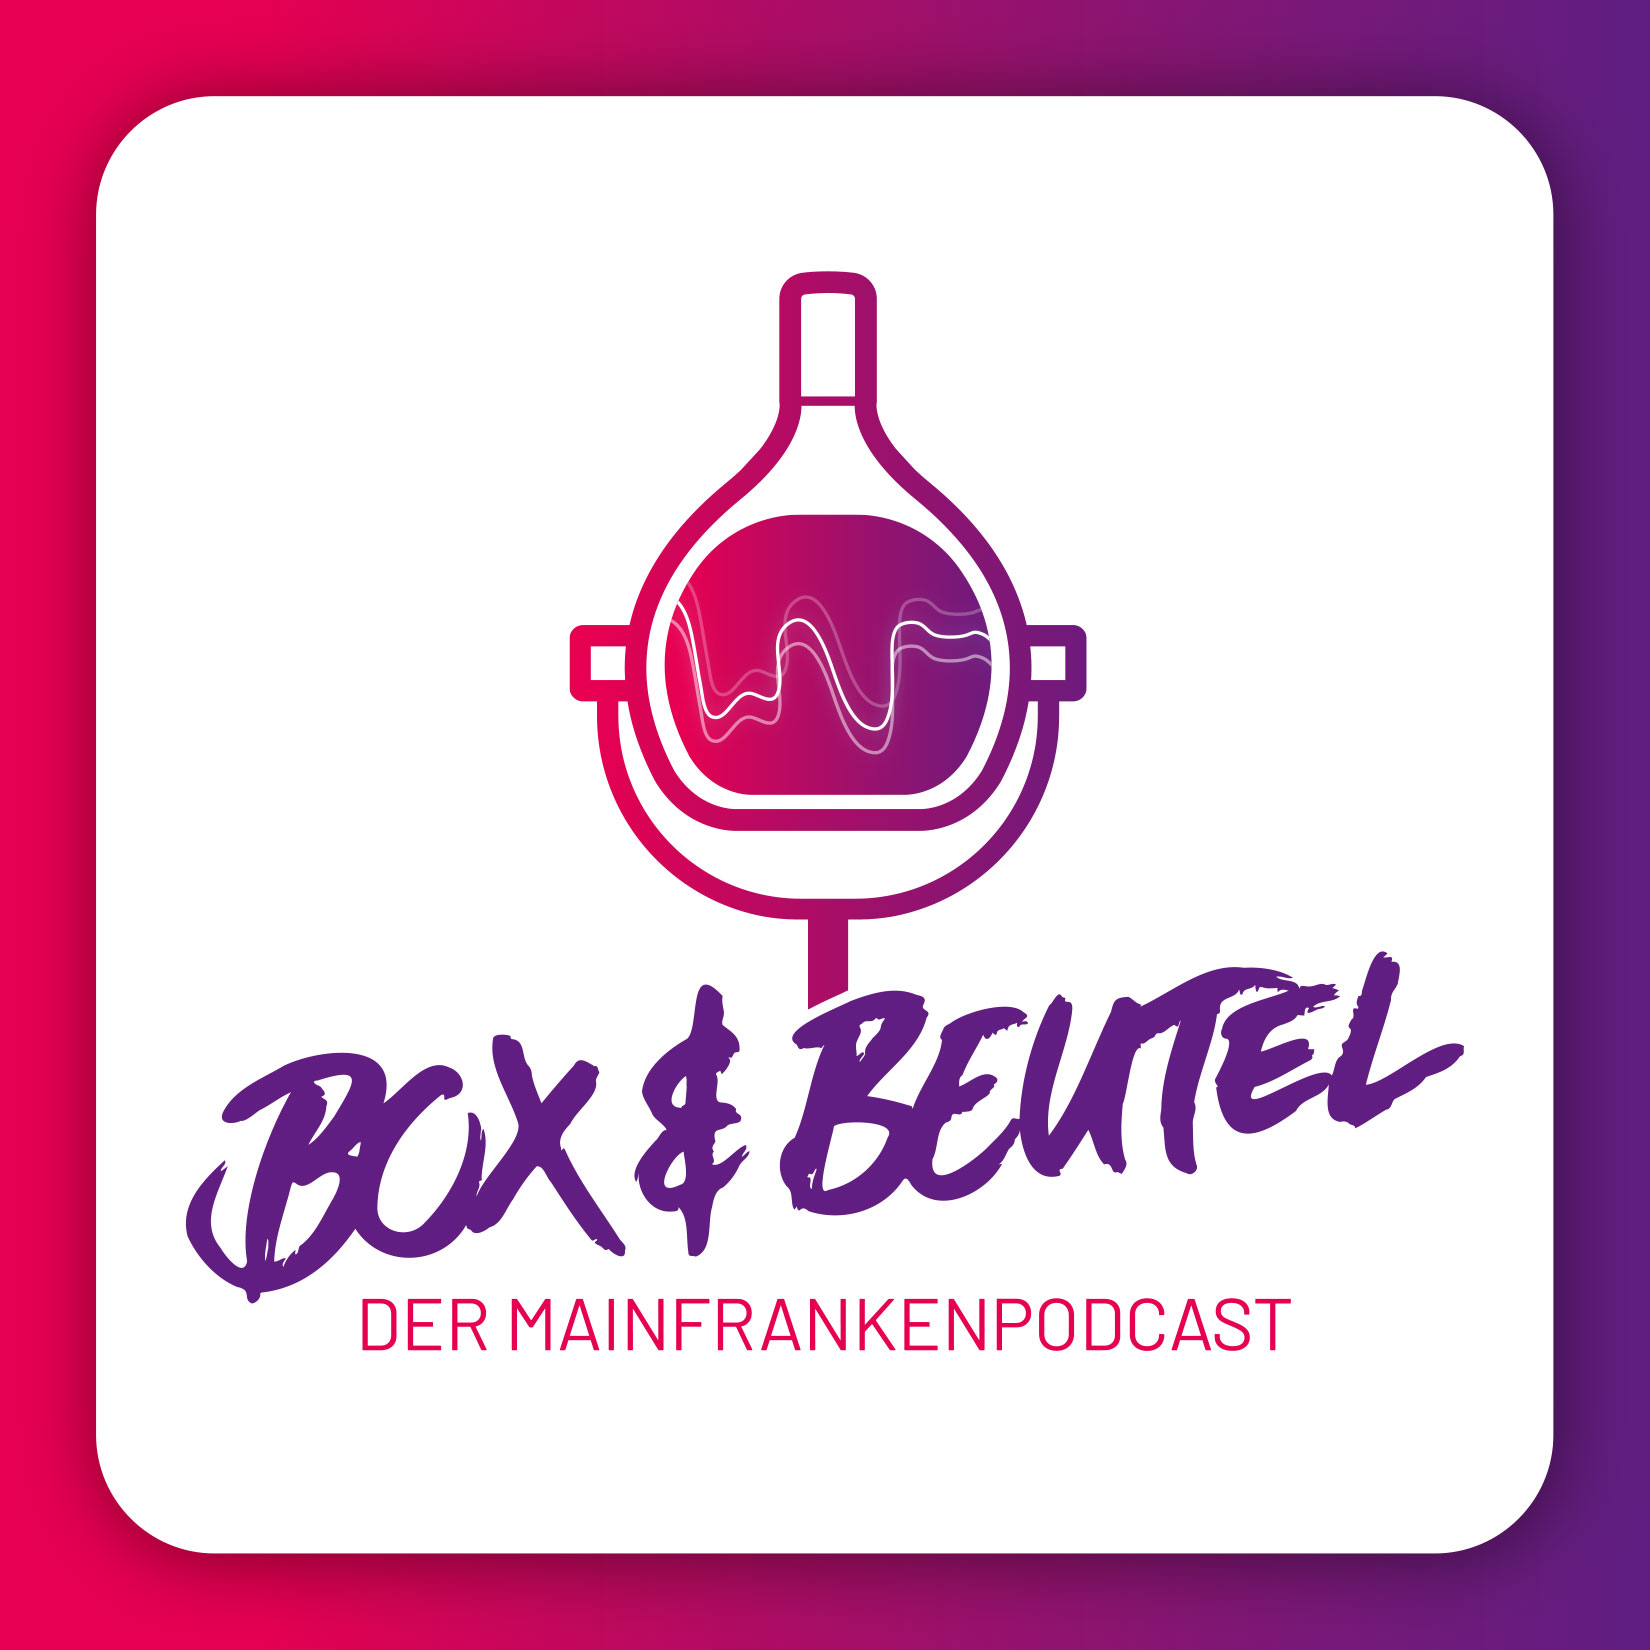 Mainfranken Podcast Logogestaltung Box&Beutel